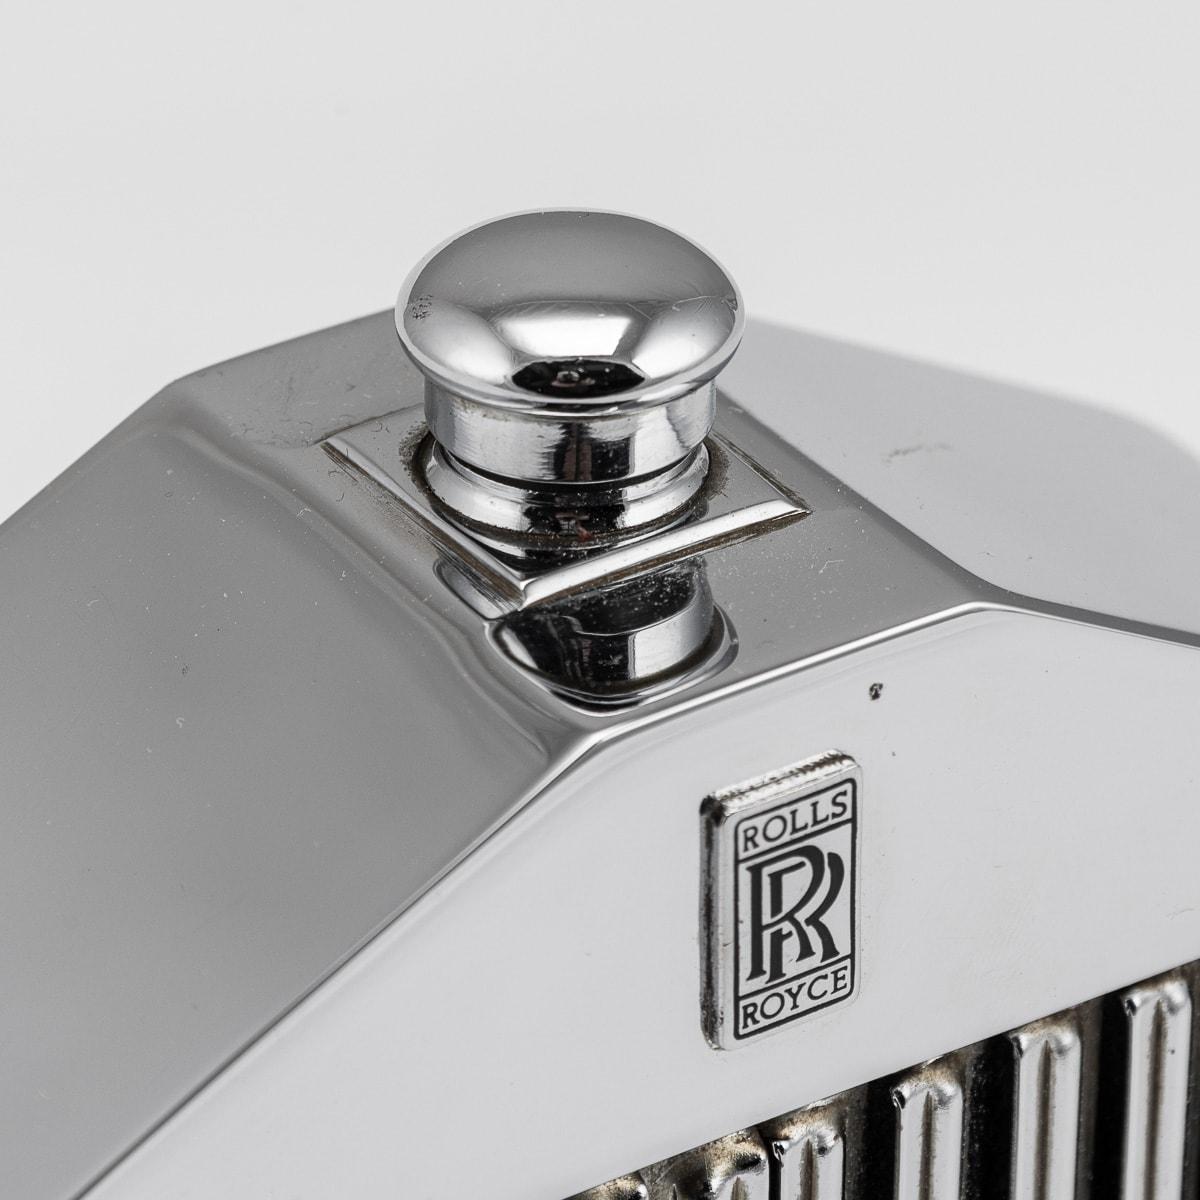 20th Century Stylish Ruddspeed Rolls Royce Radiator Flask / Decanter c.1960 1